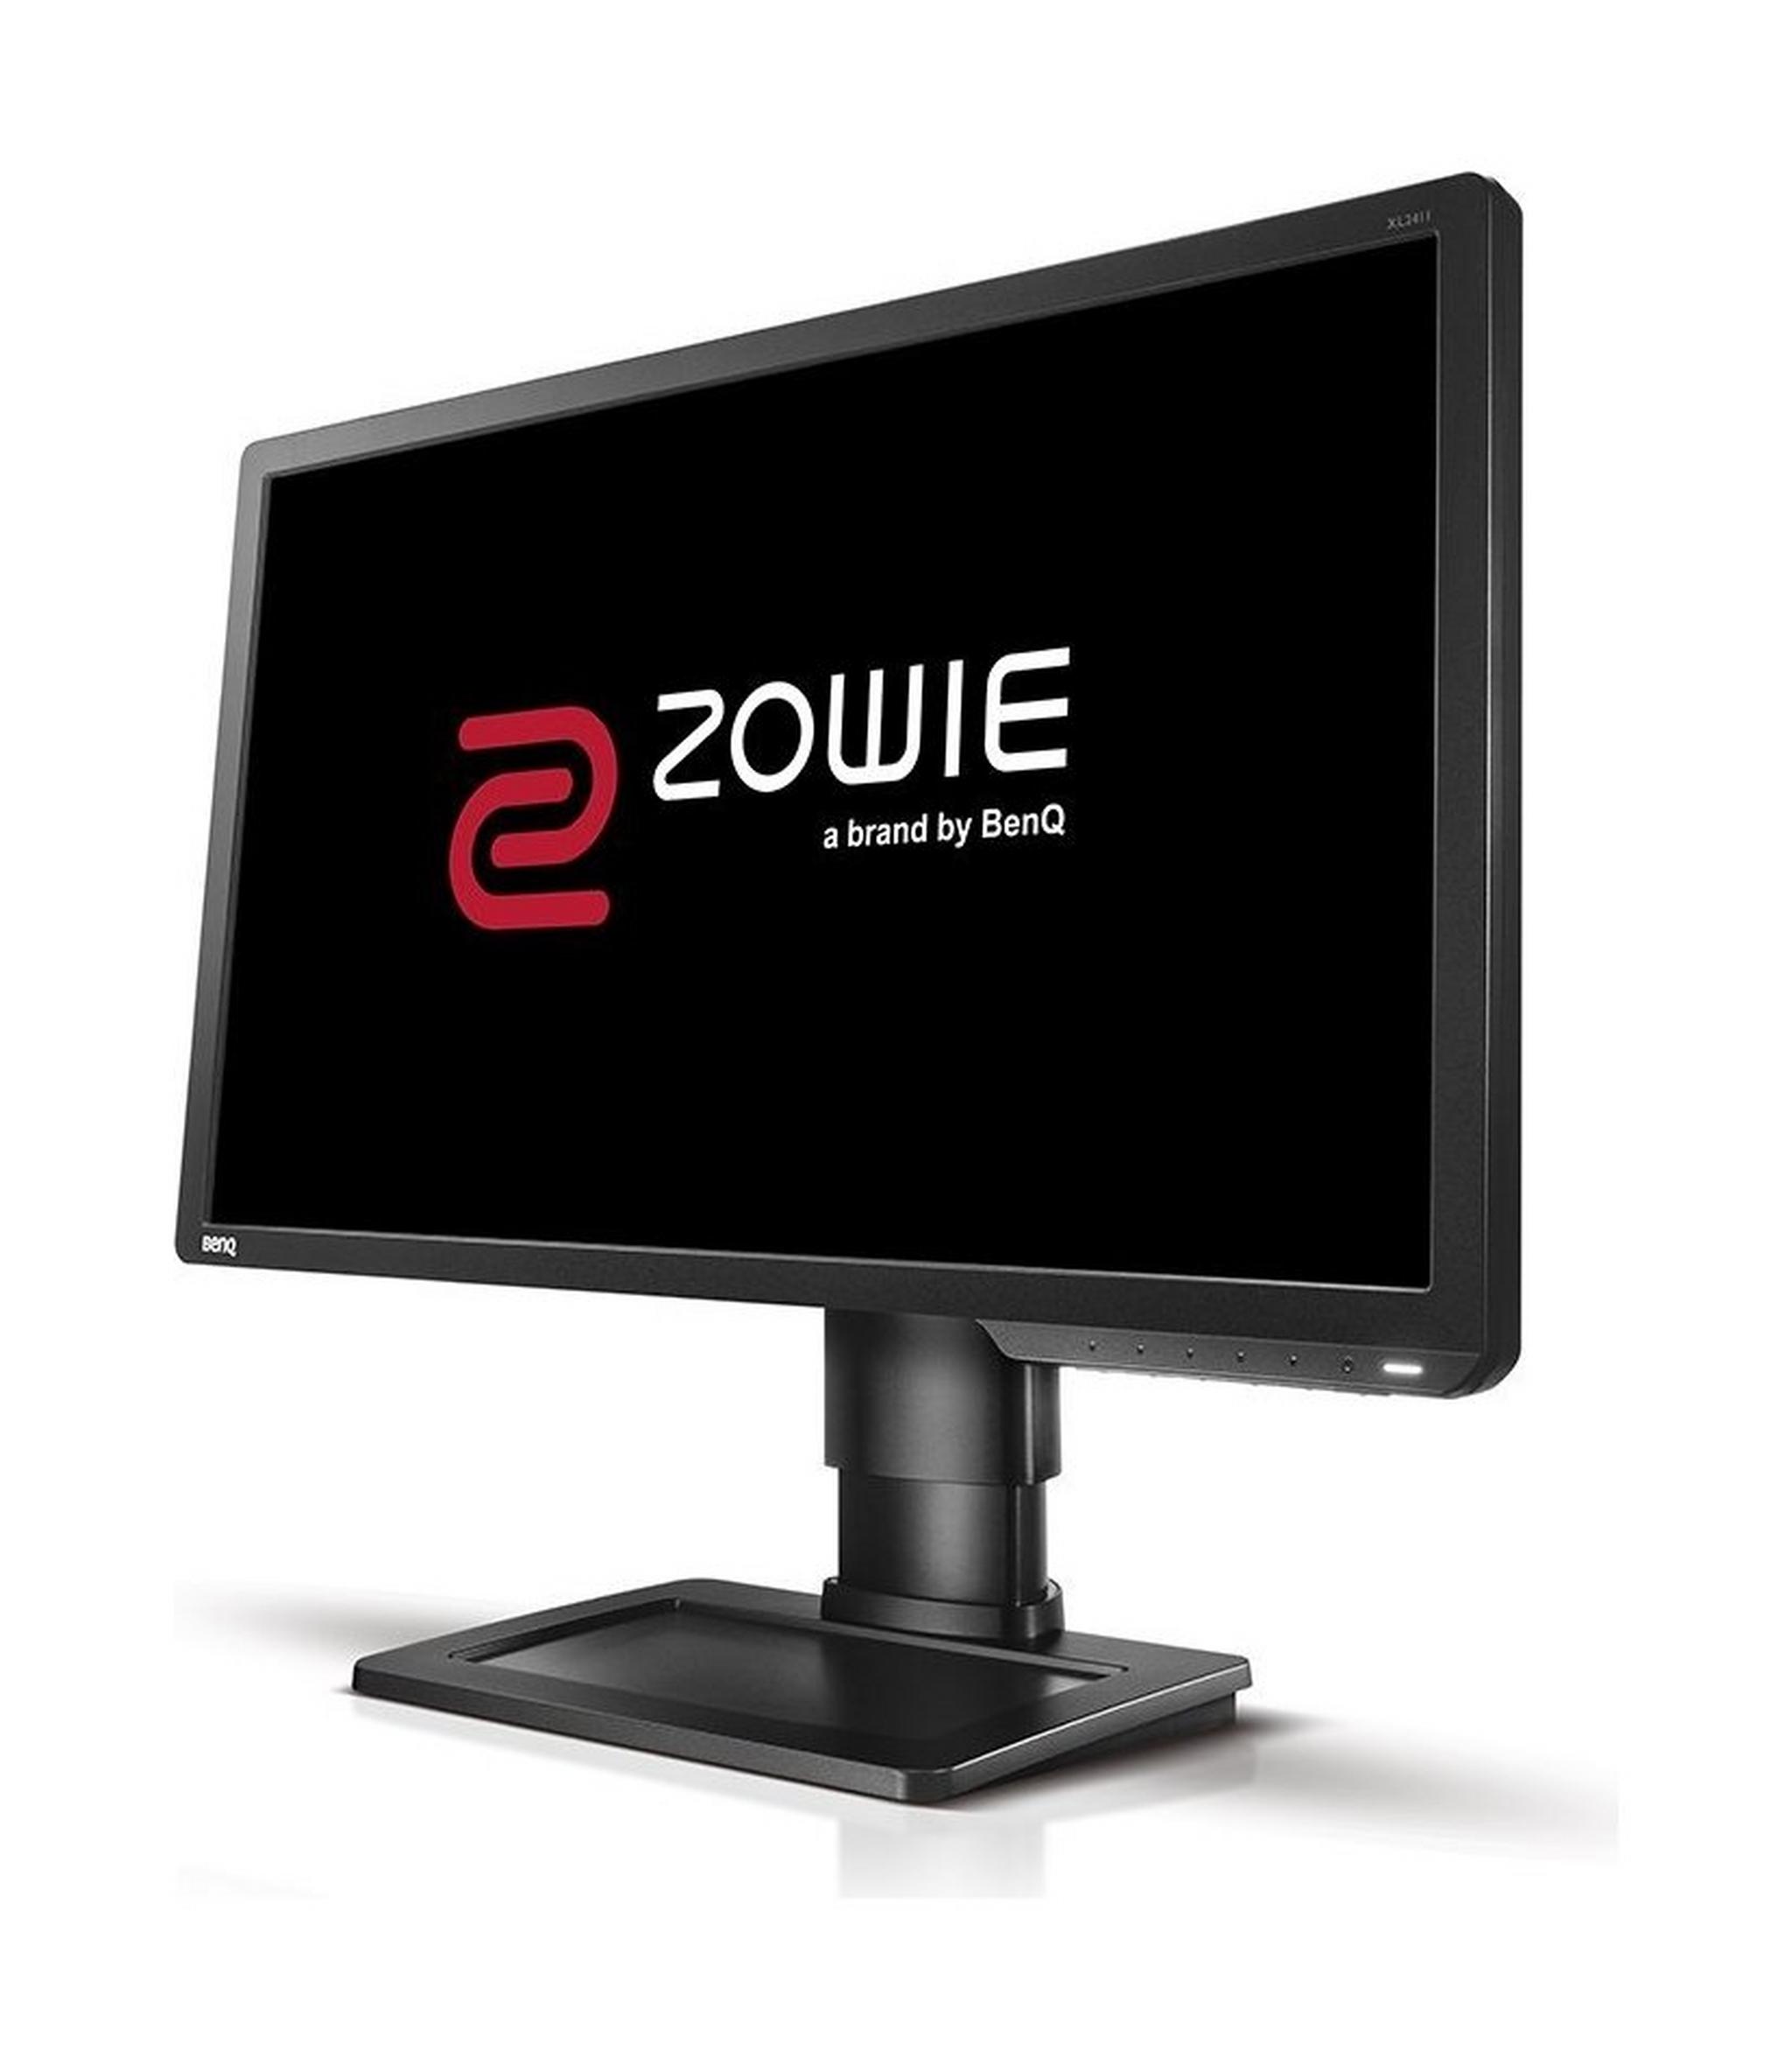 BenQ Zowie 24 inch LCD Gaming Monitor (XL2411P) - Black